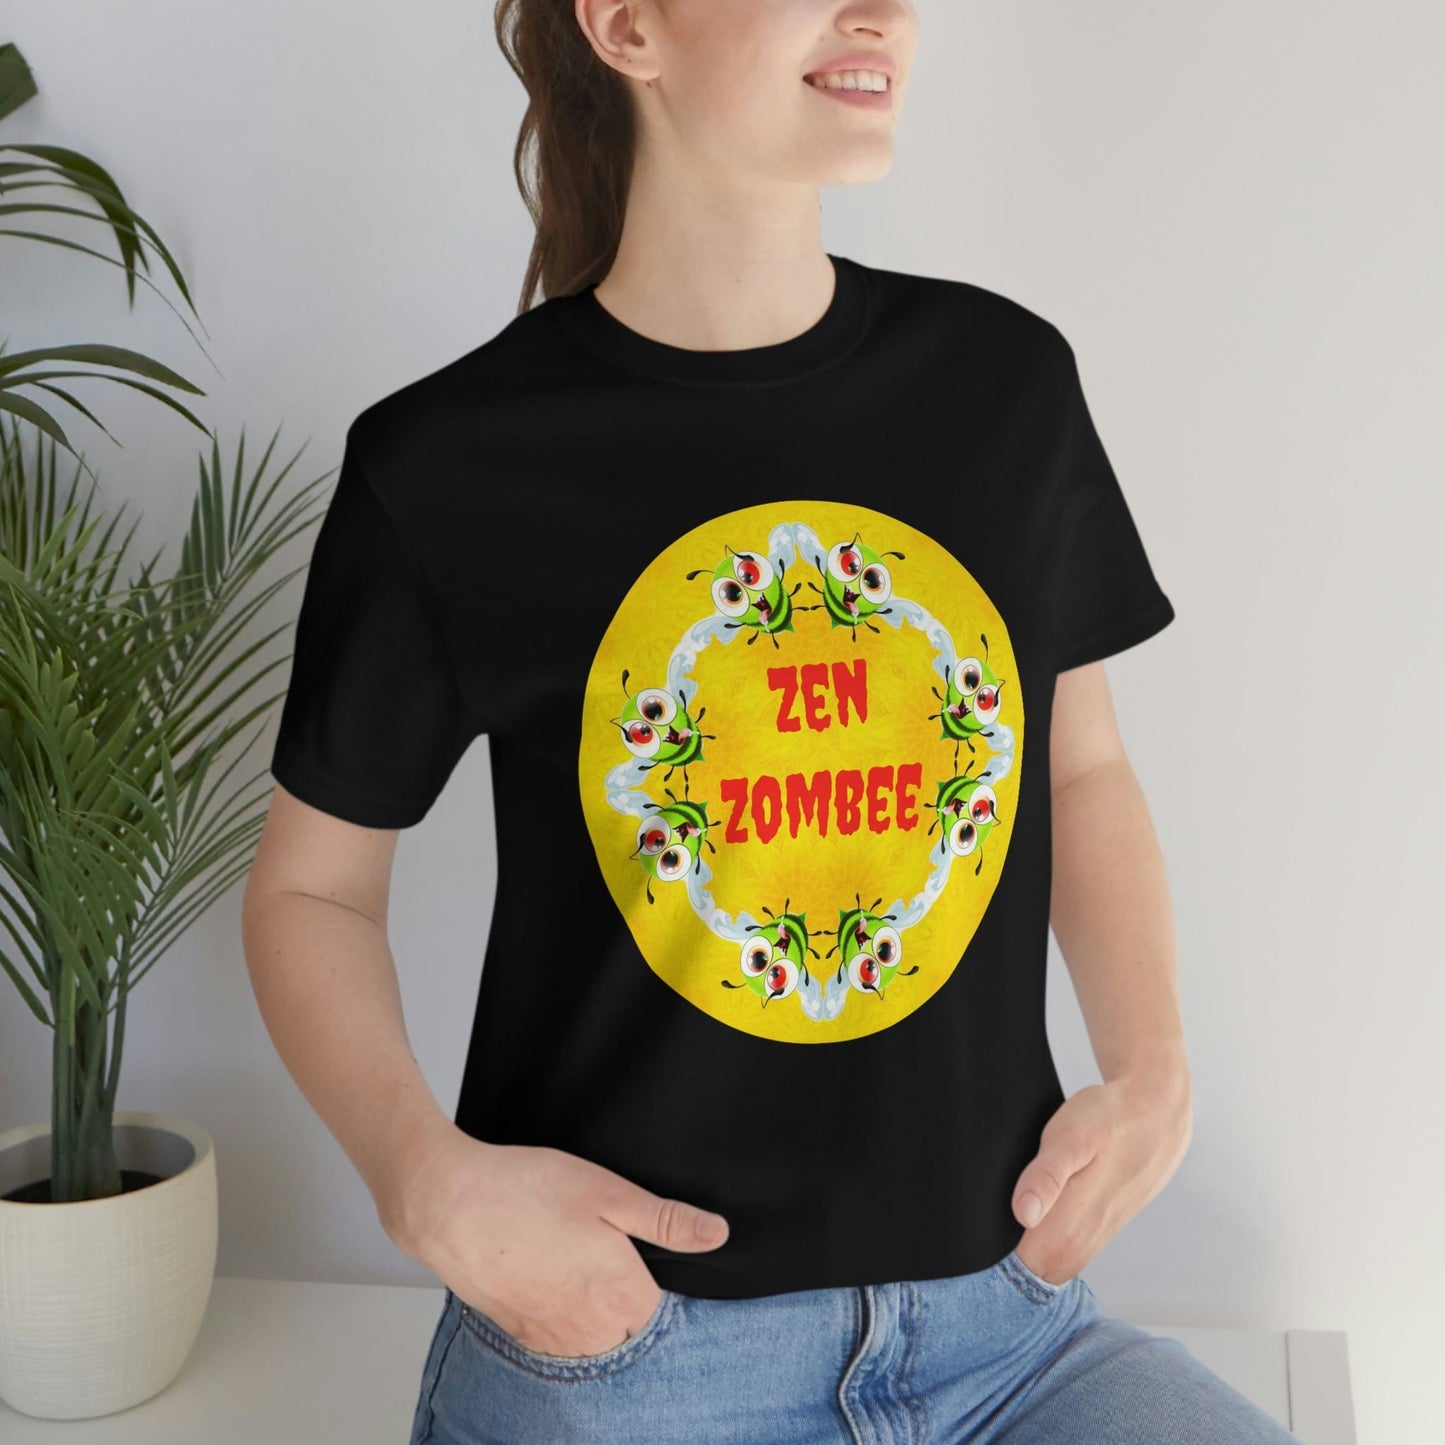 Weird Ironic Bee Shirt, Funny Zombie Shirt, Best Selling Kawaii Shirt, Witty Fun Shirt Designs, Soft Bella Canvas Cool Graphic Tee, Unique